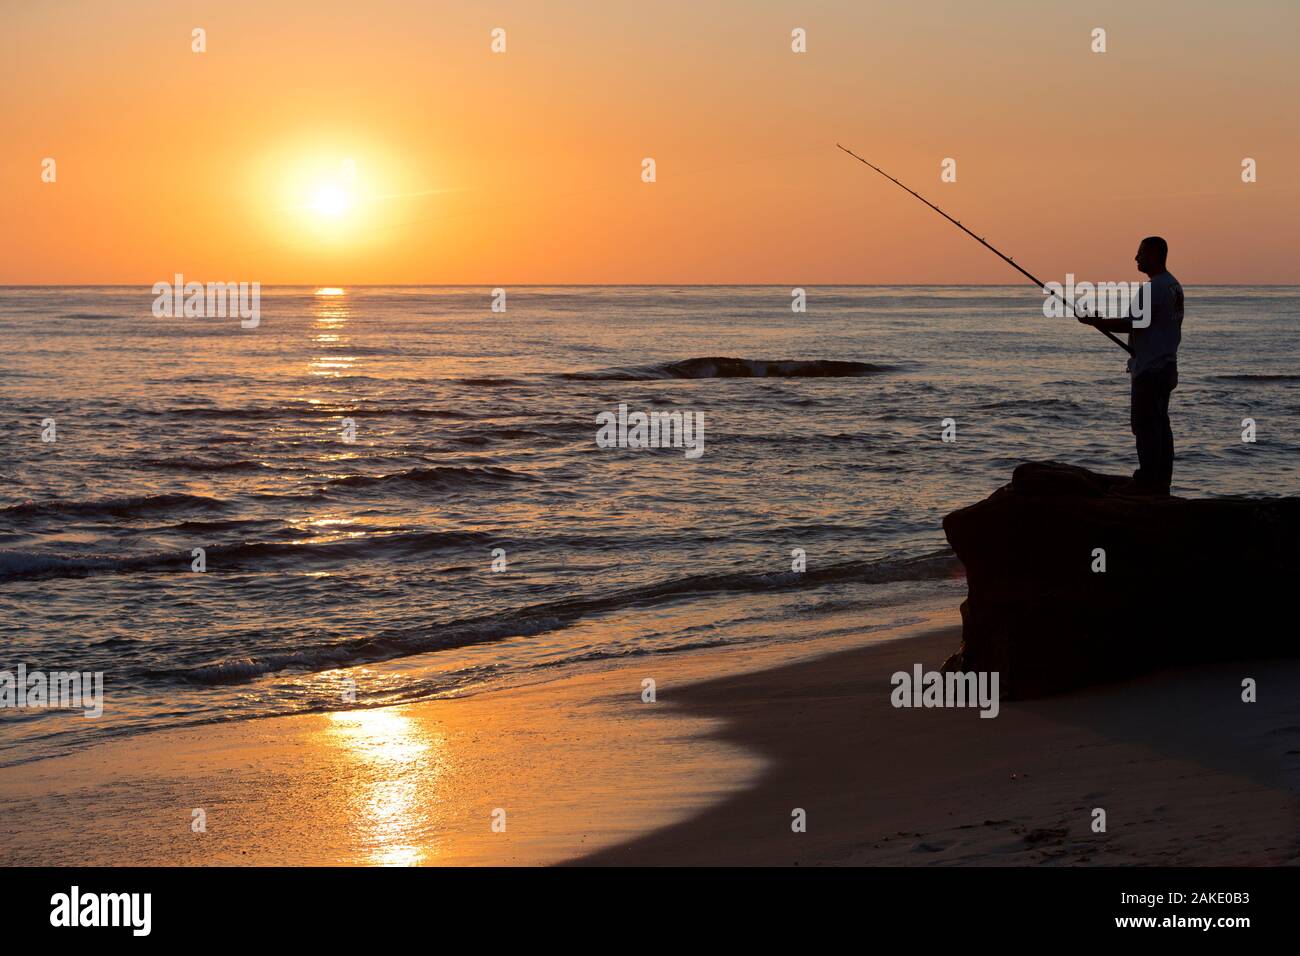 Man Surf Fishing at Sunset, La Jolla, California Stock Photo